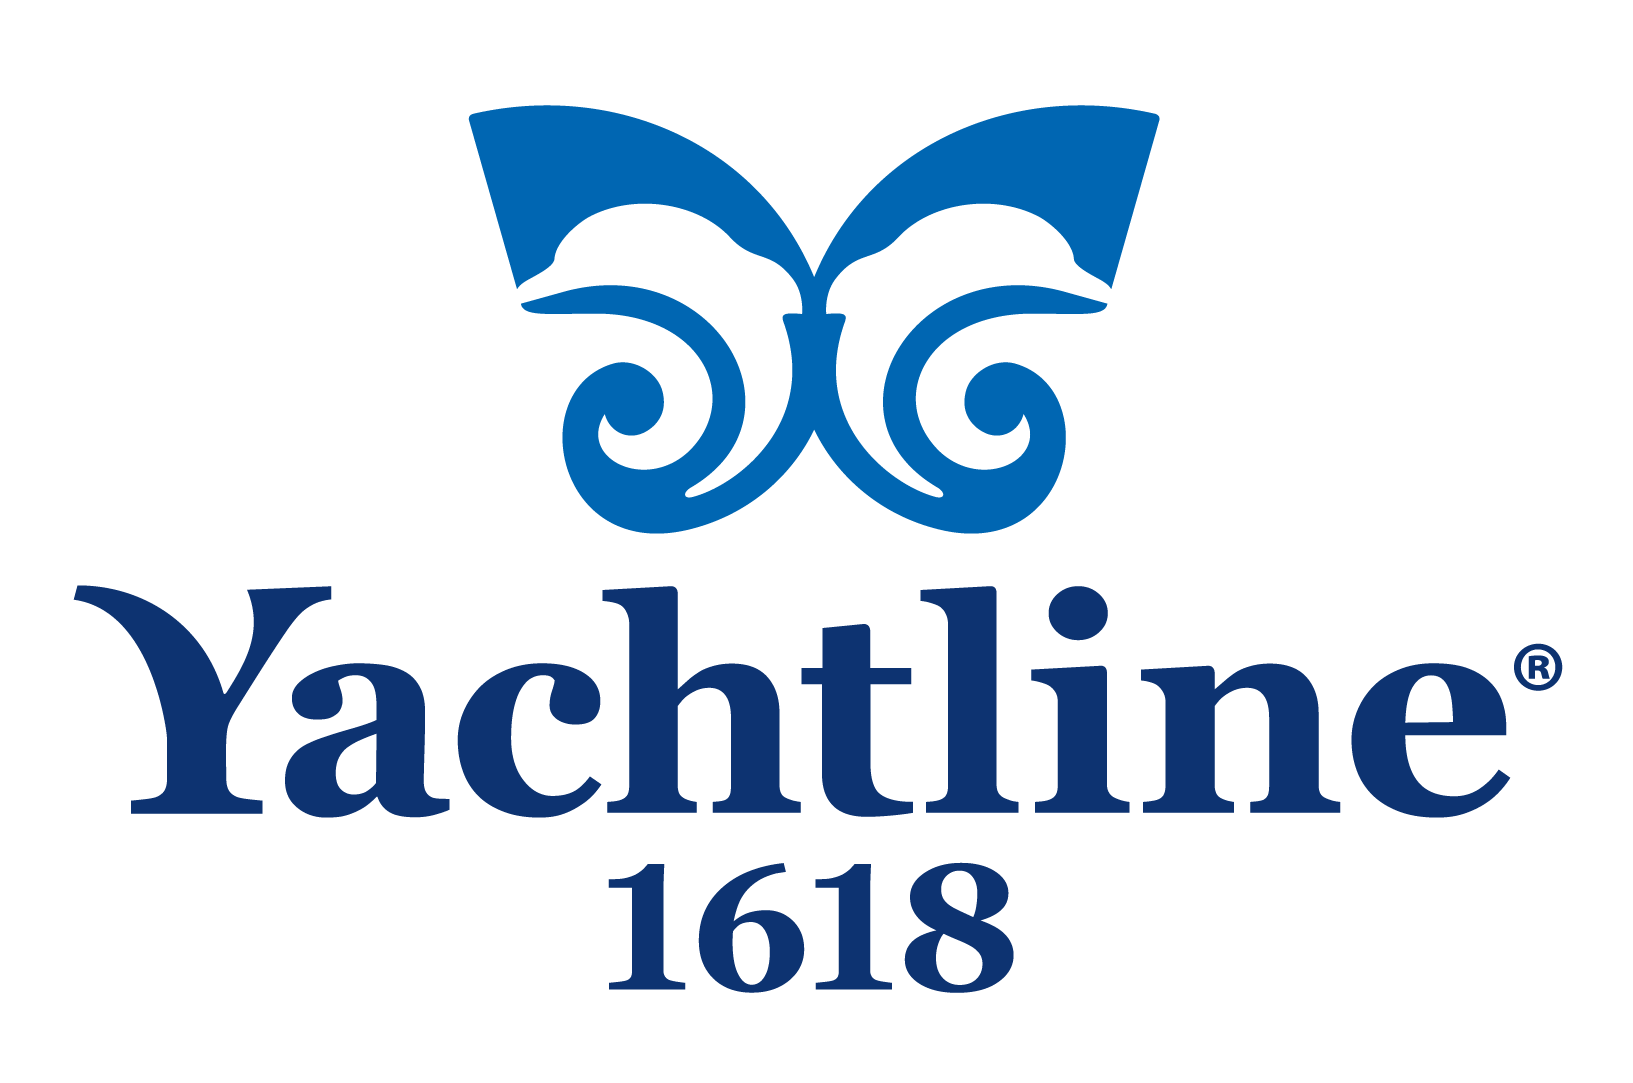 Yachtline